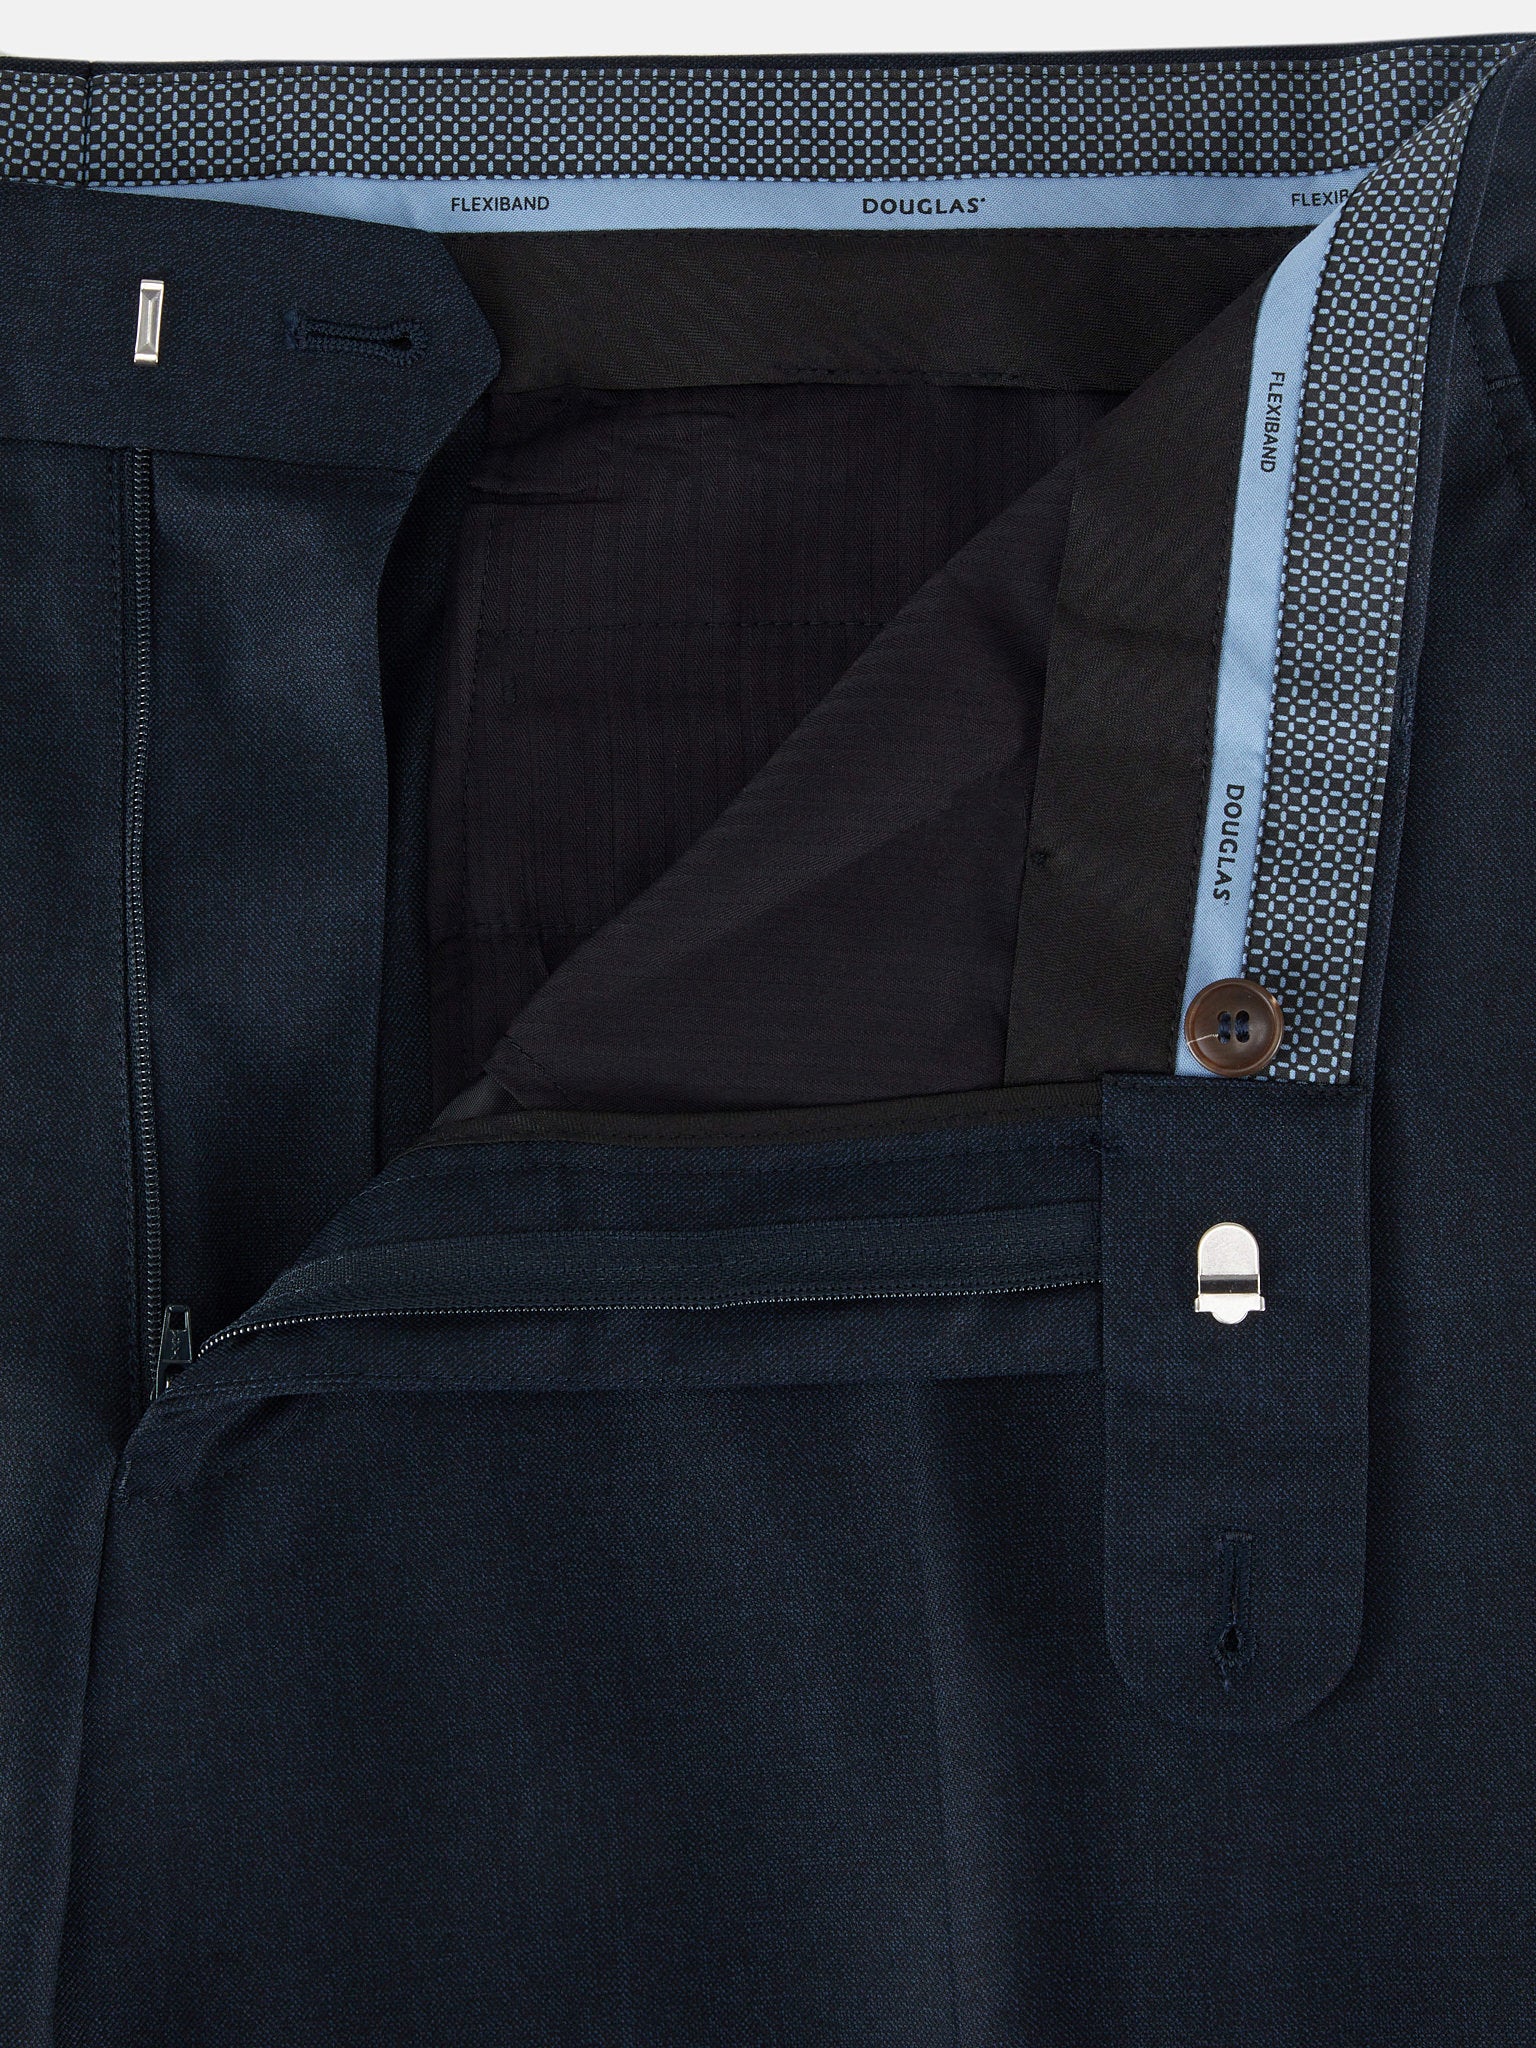 Douglas Valdino Dark Blue Mix & Match Suit Trousers Regular Length